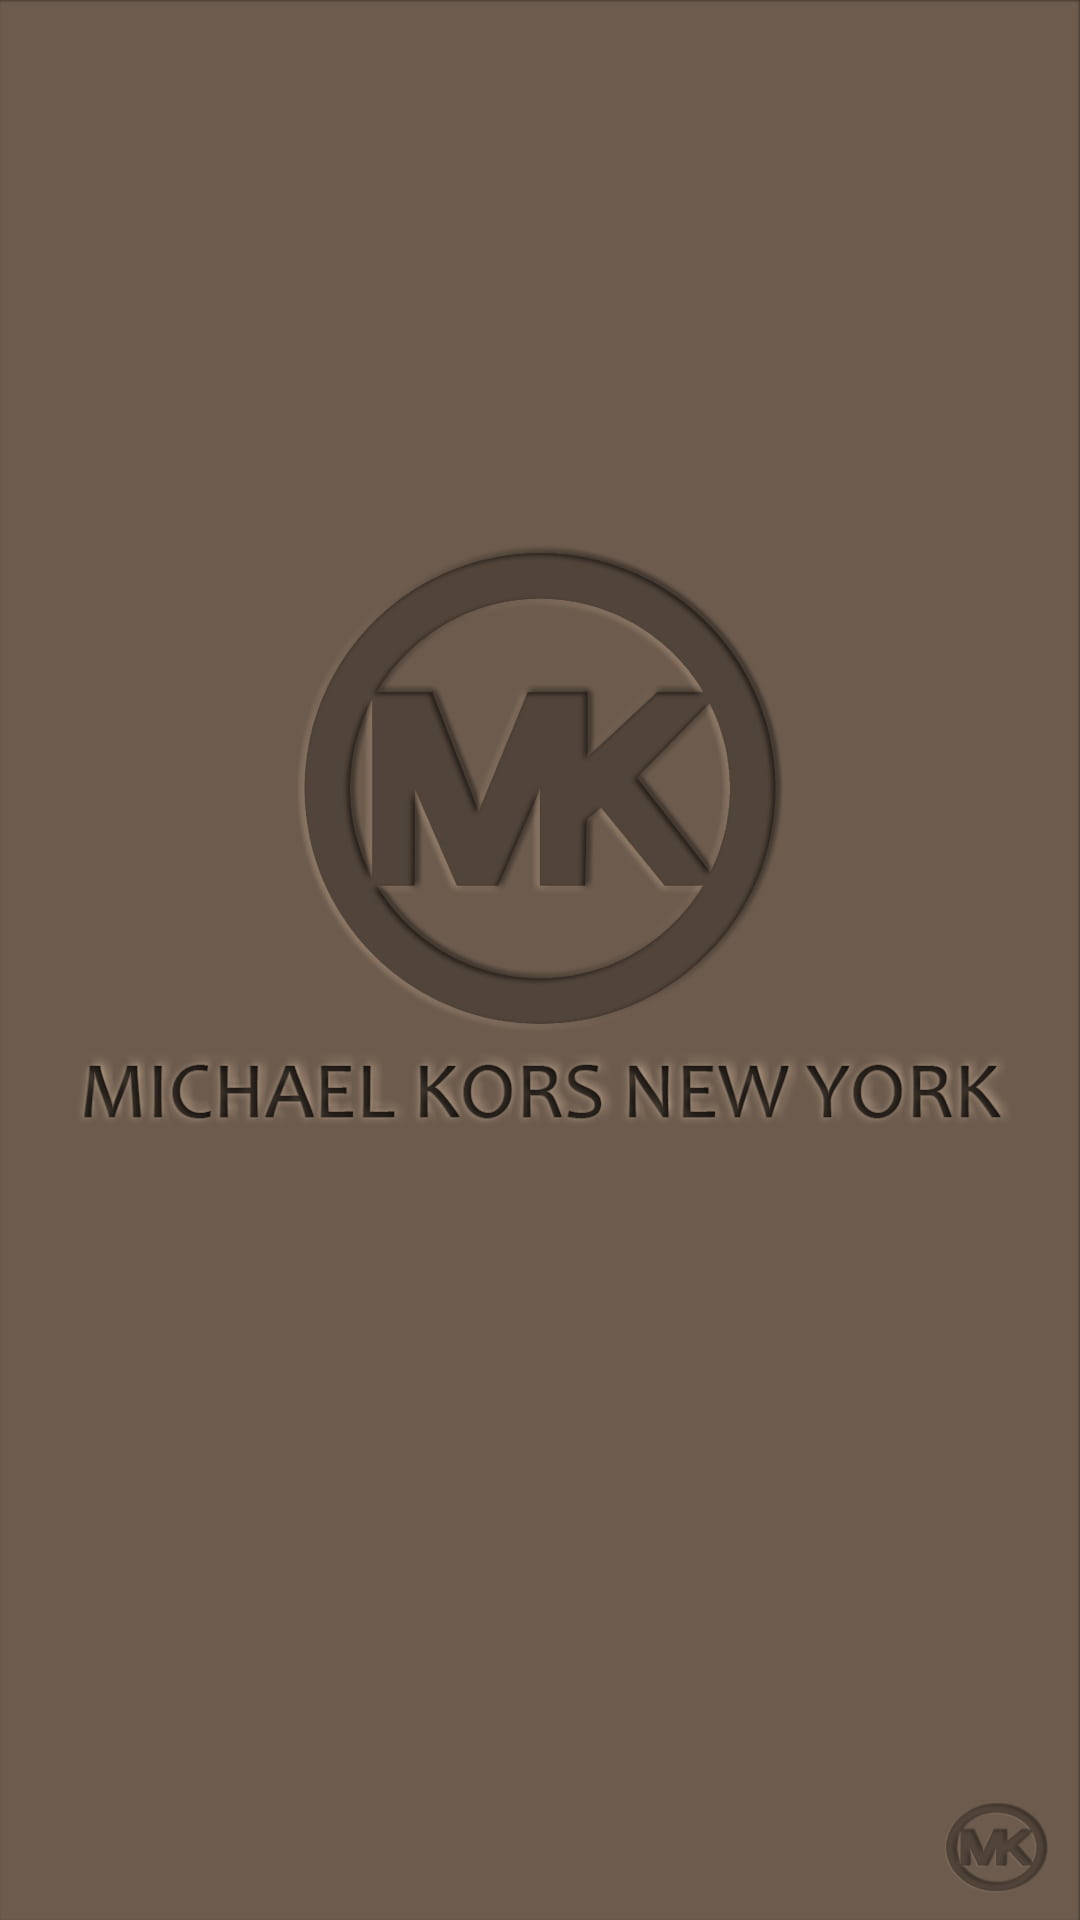 Michael Kors New York Logo Background